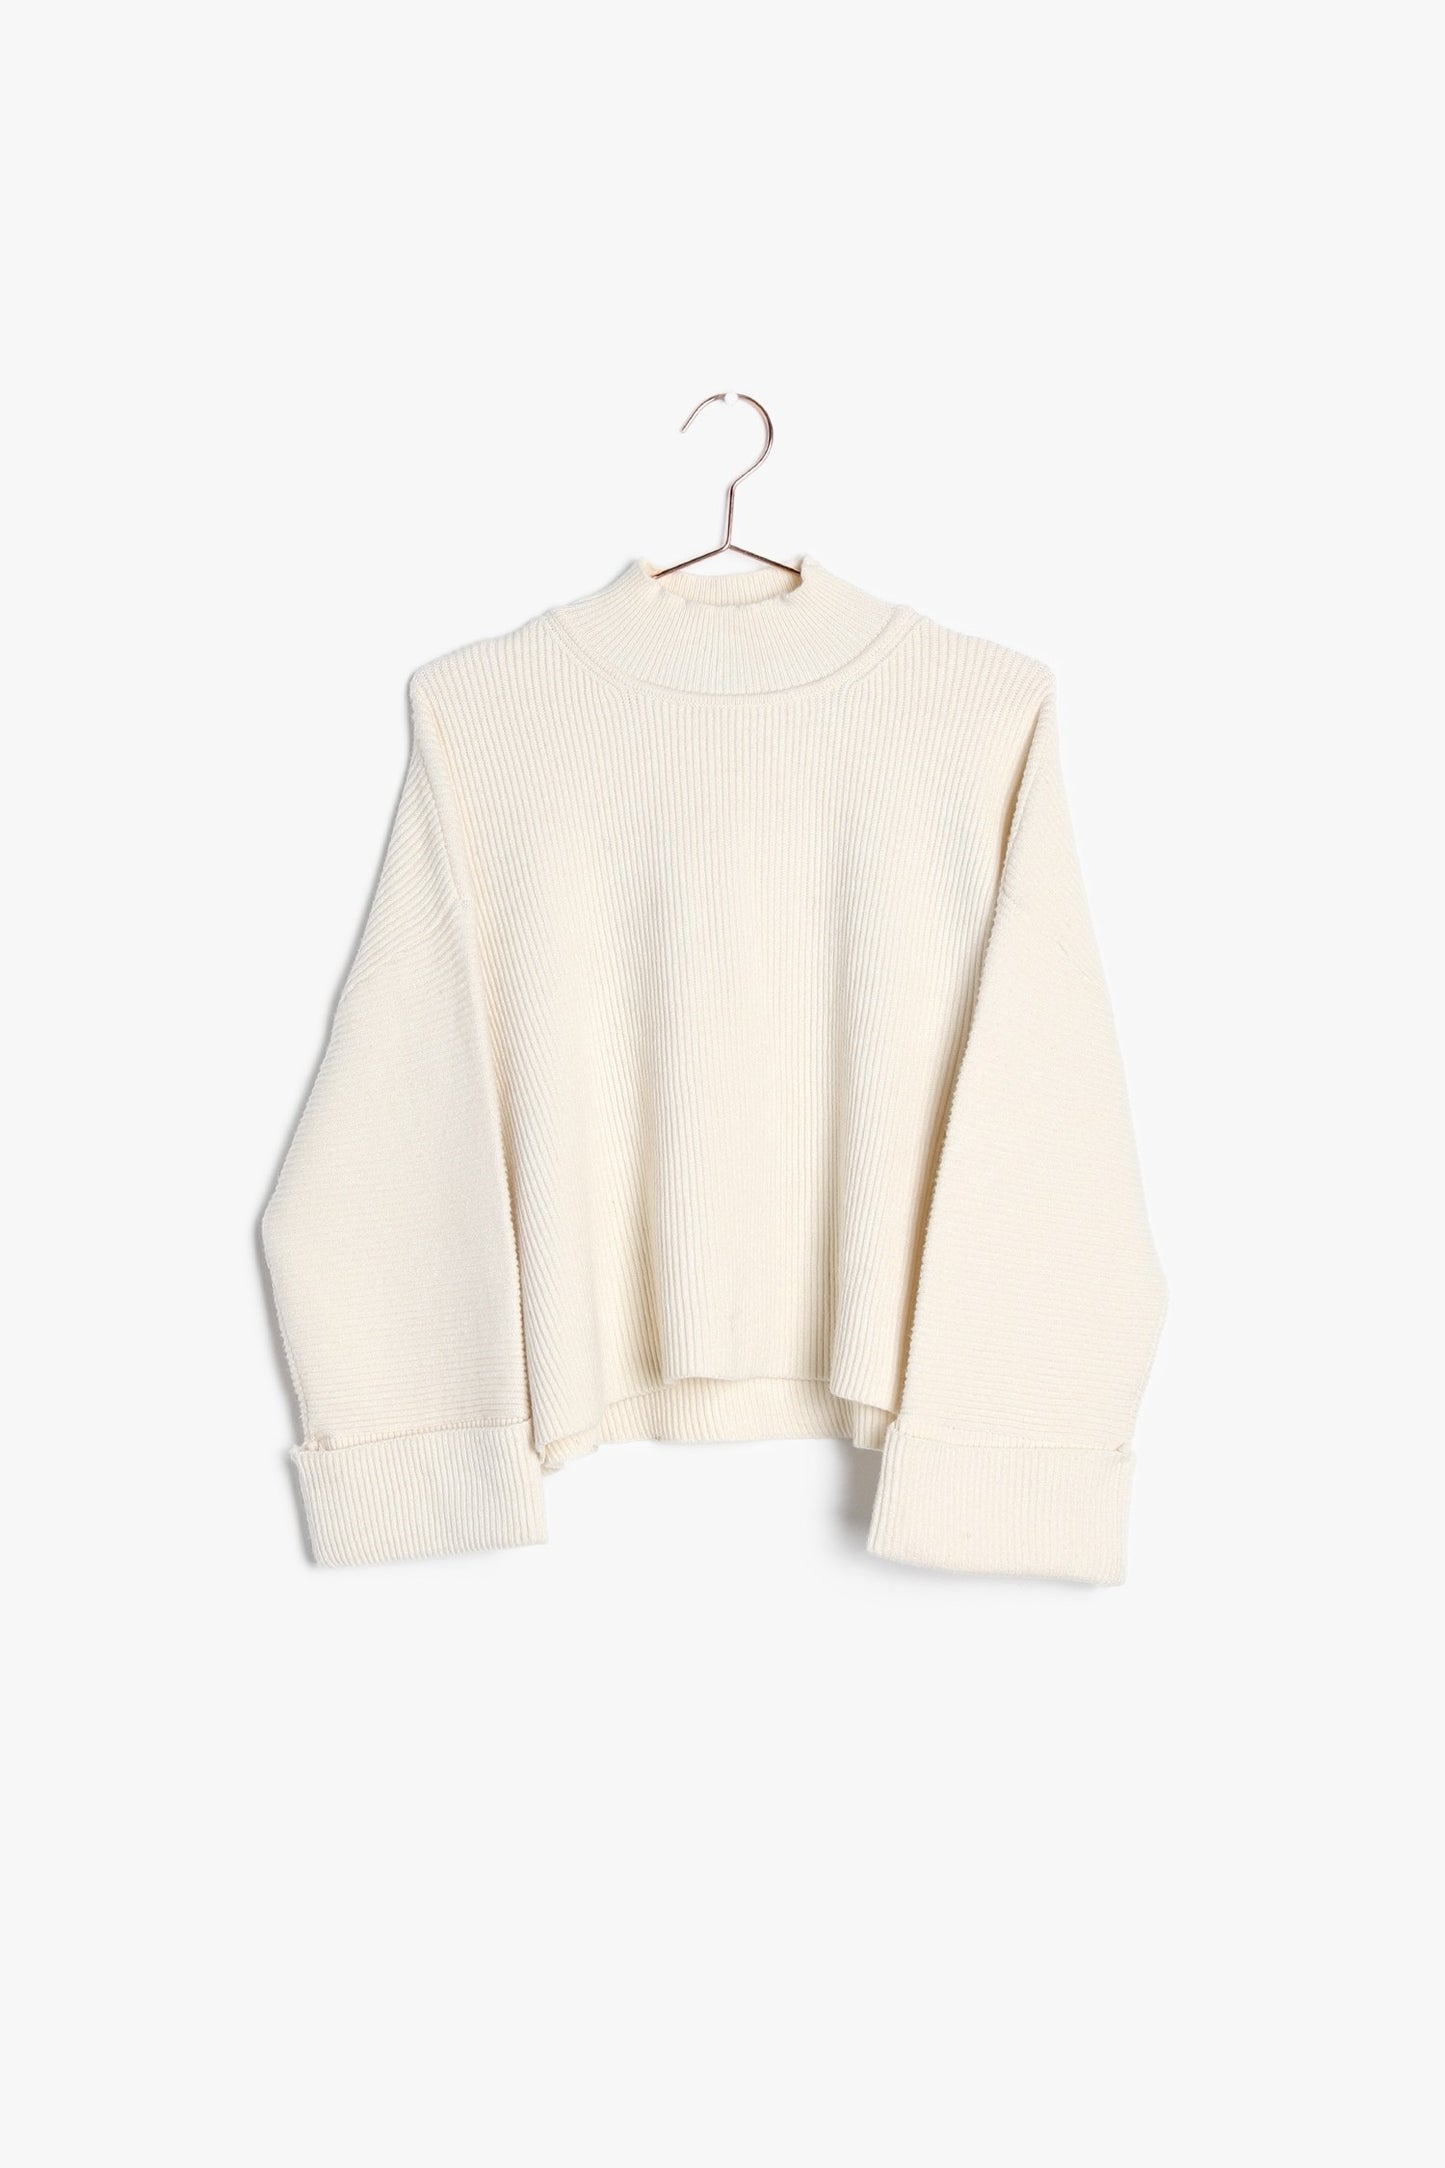 The Lima Sweater - Cream